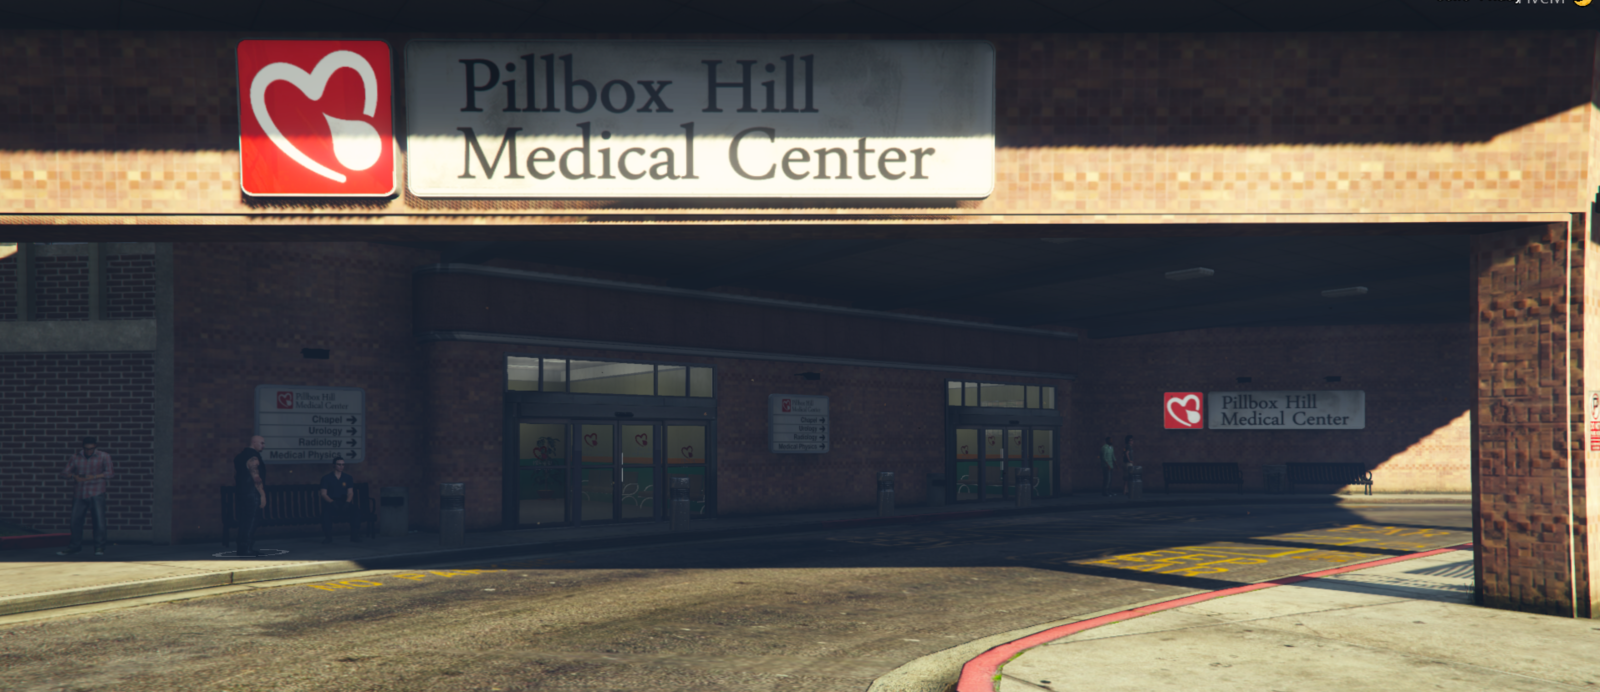 Pillbox Hill Medical Center Lower Entrance